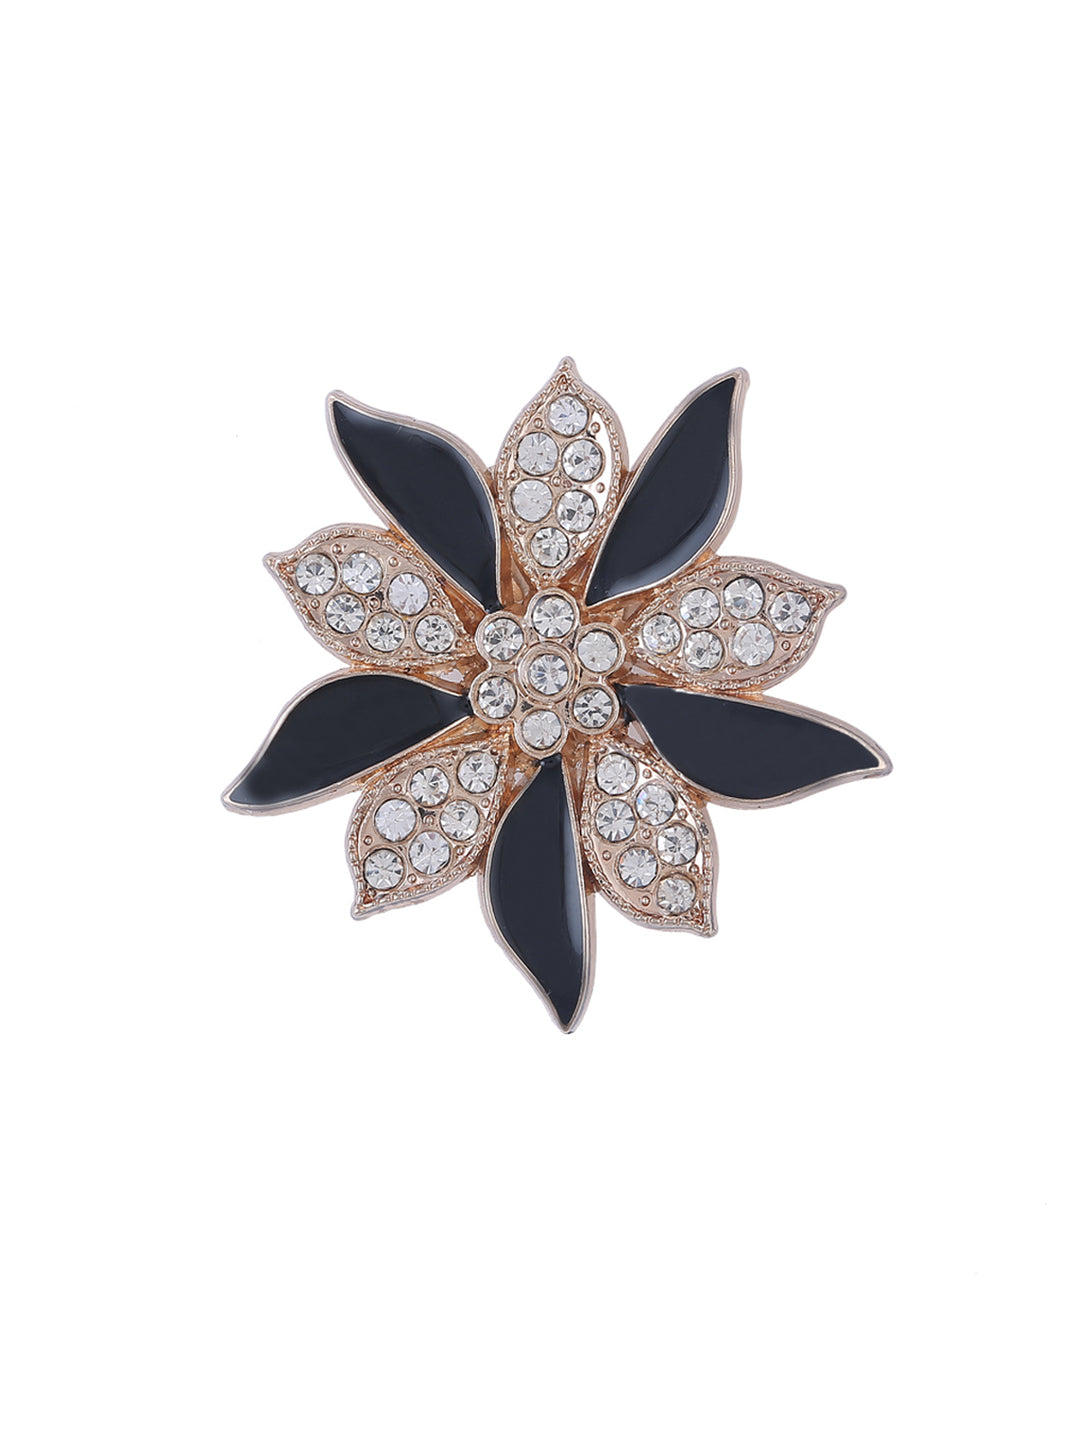 Golden with Black Enamel Diamond Flower Brooch Pin